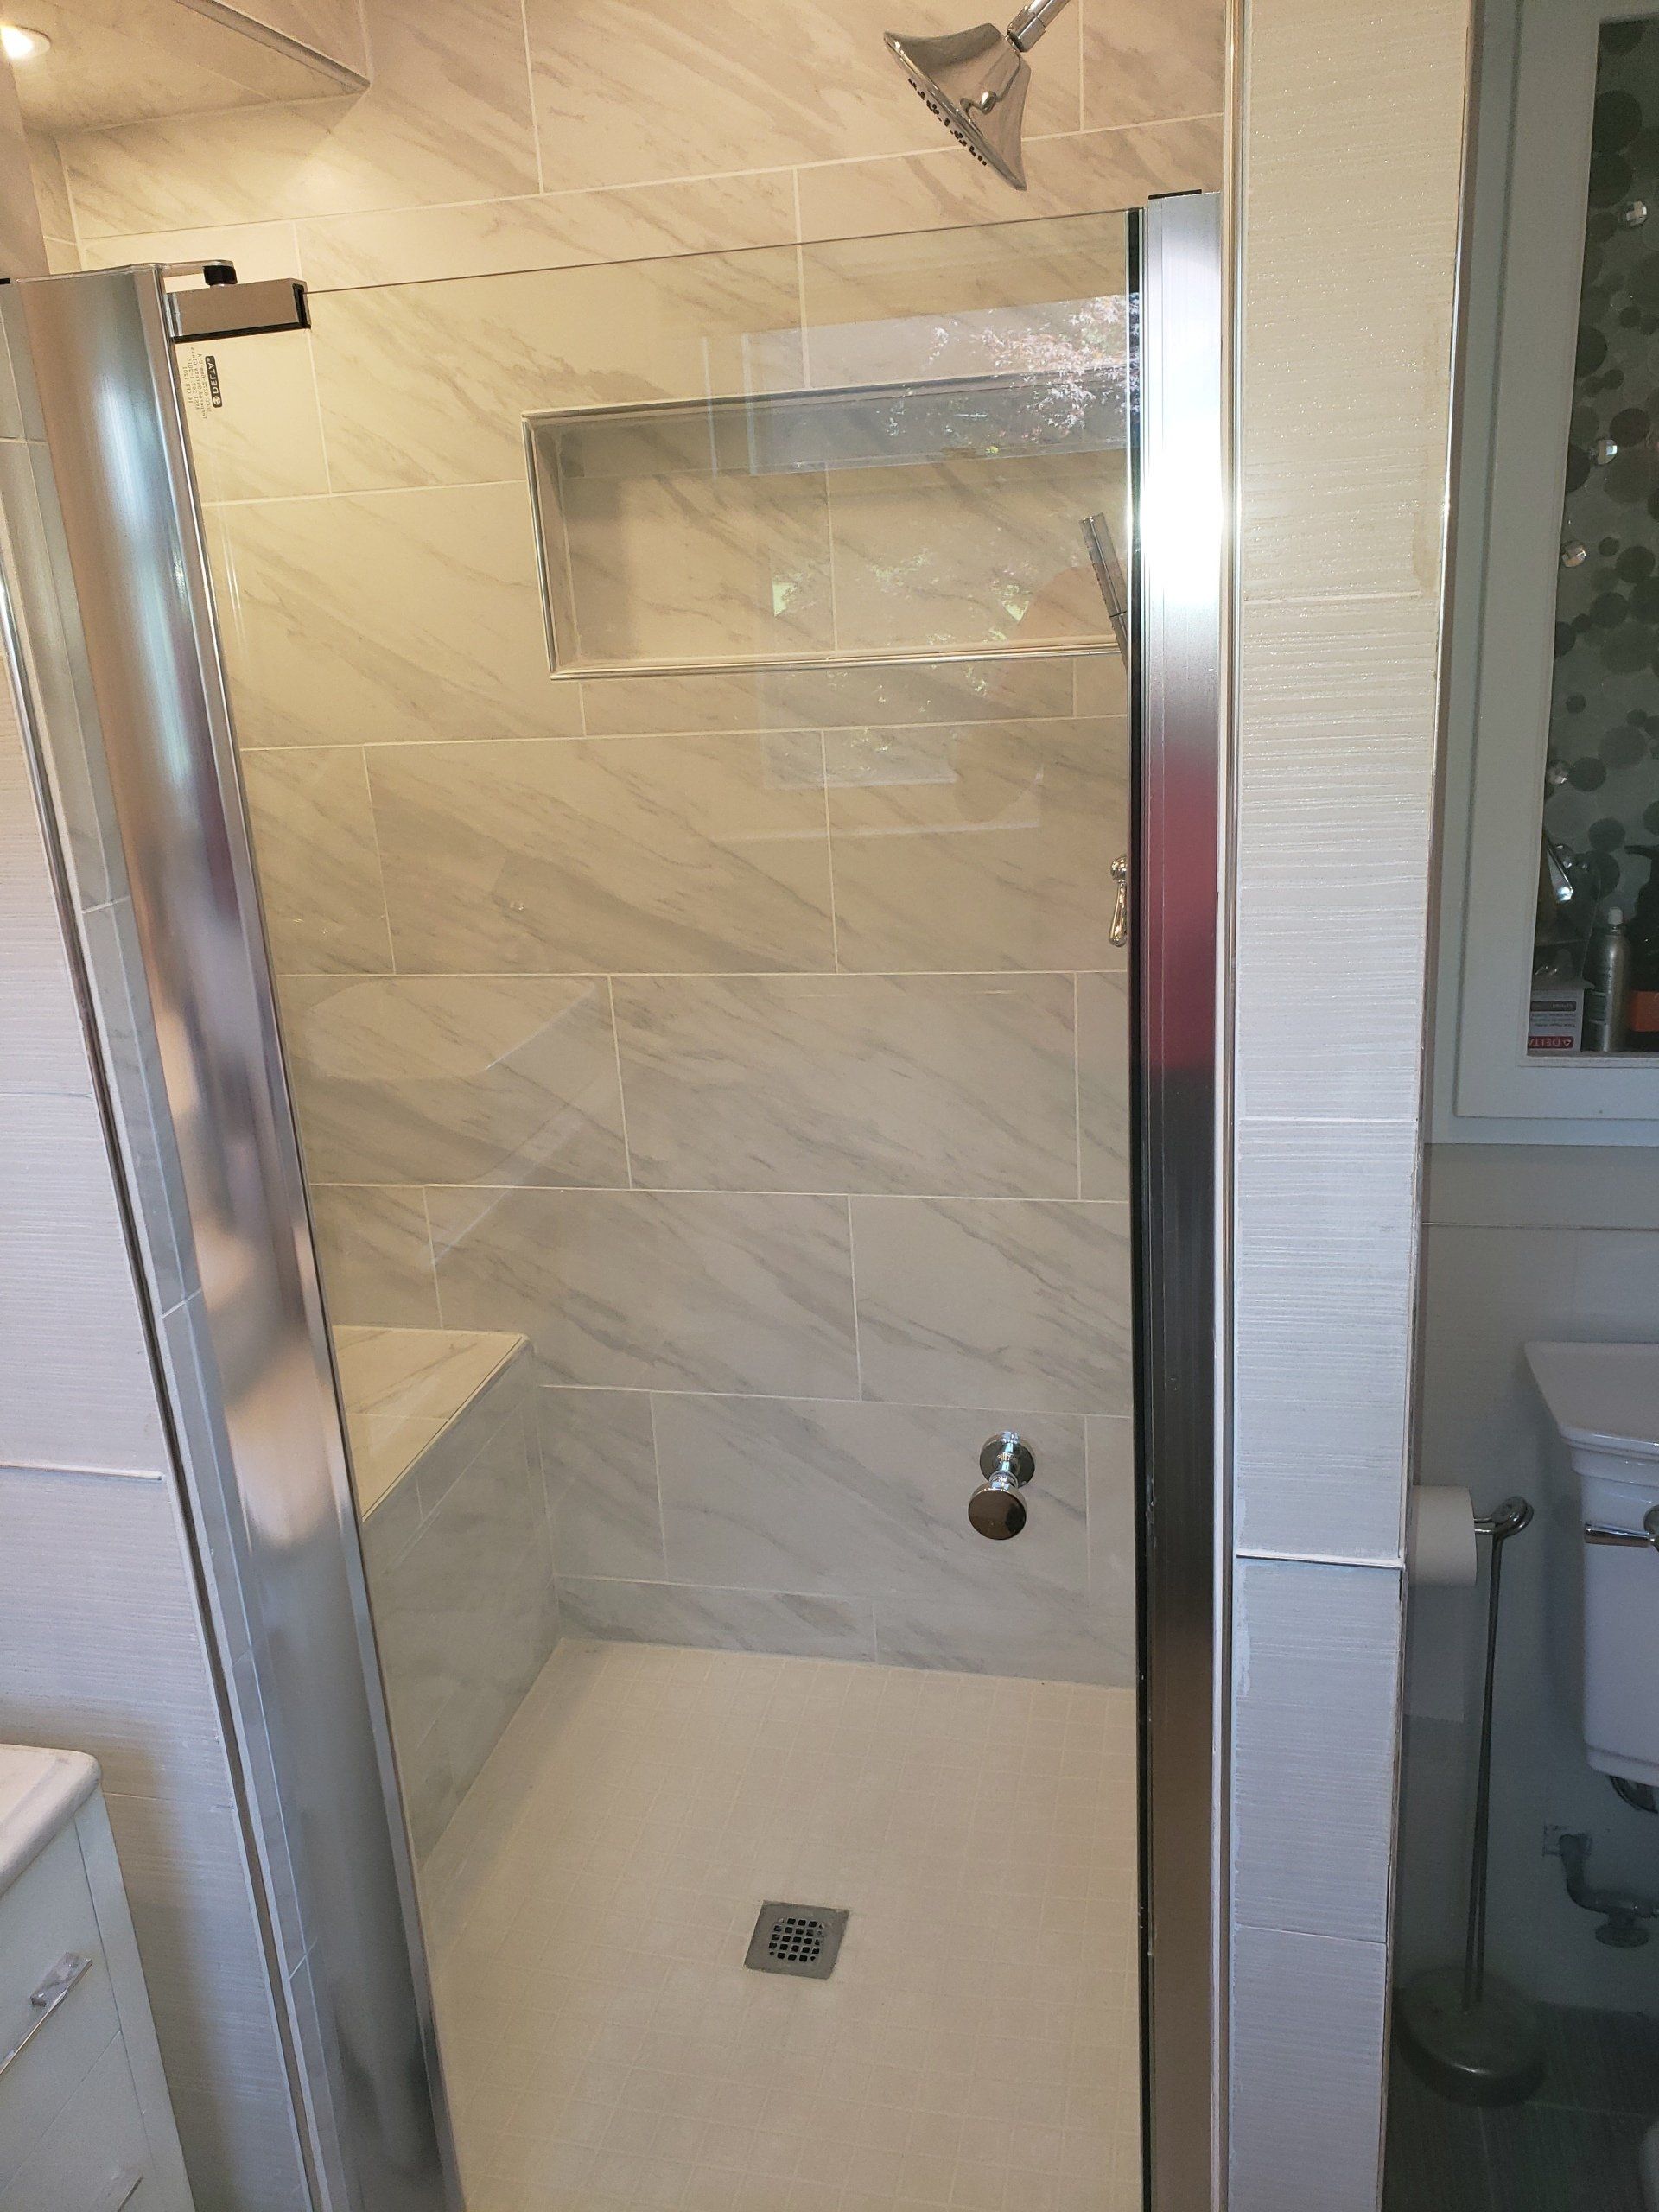 after photo of elkins park master bathroom shower expansion and remodel close up of mosaic floor tile and niche shelf